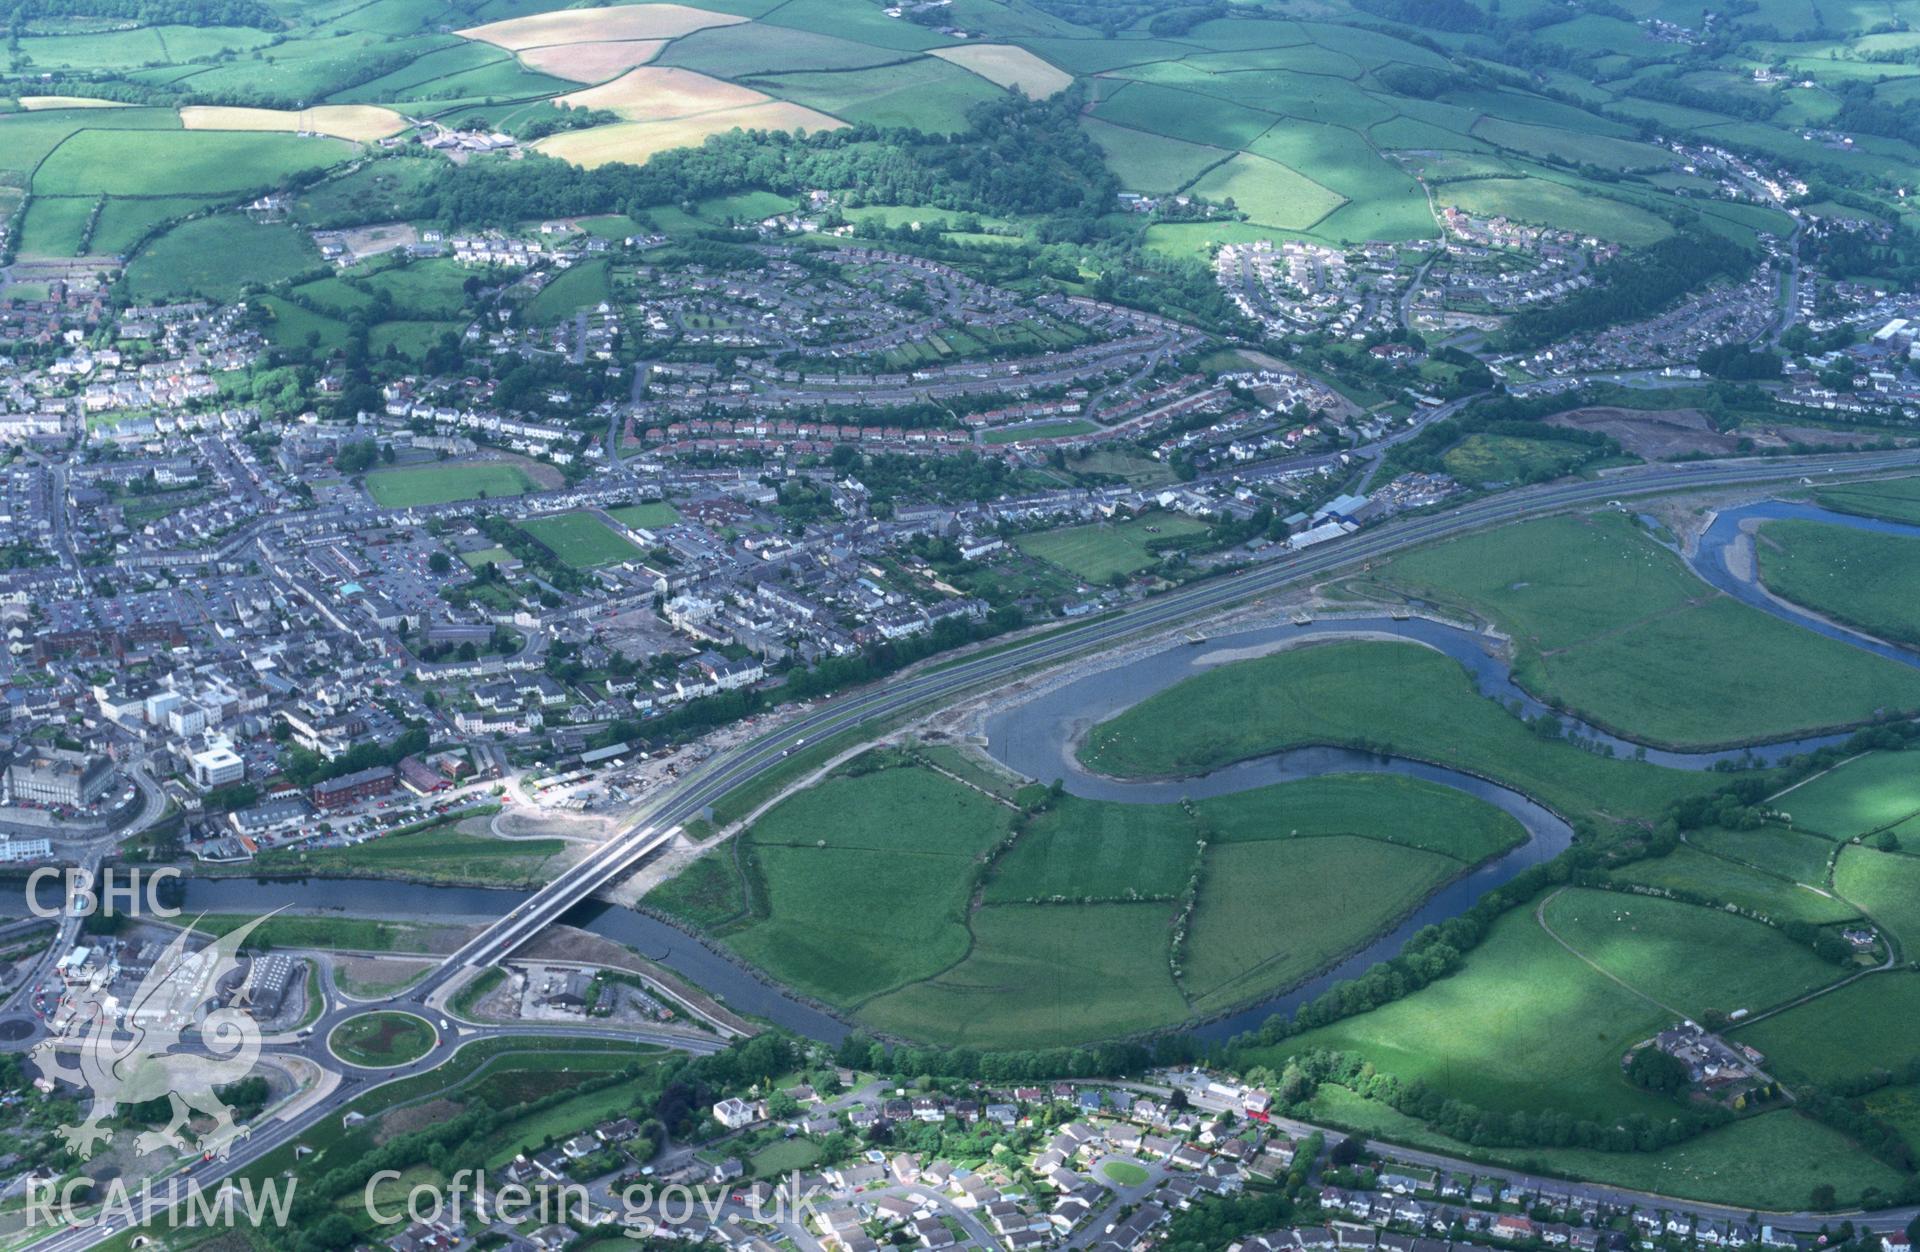 Slide of RCAHMW colour oblique aerial photograph of Carmarthen, taken by T.G. Driver, 22/5/2000.